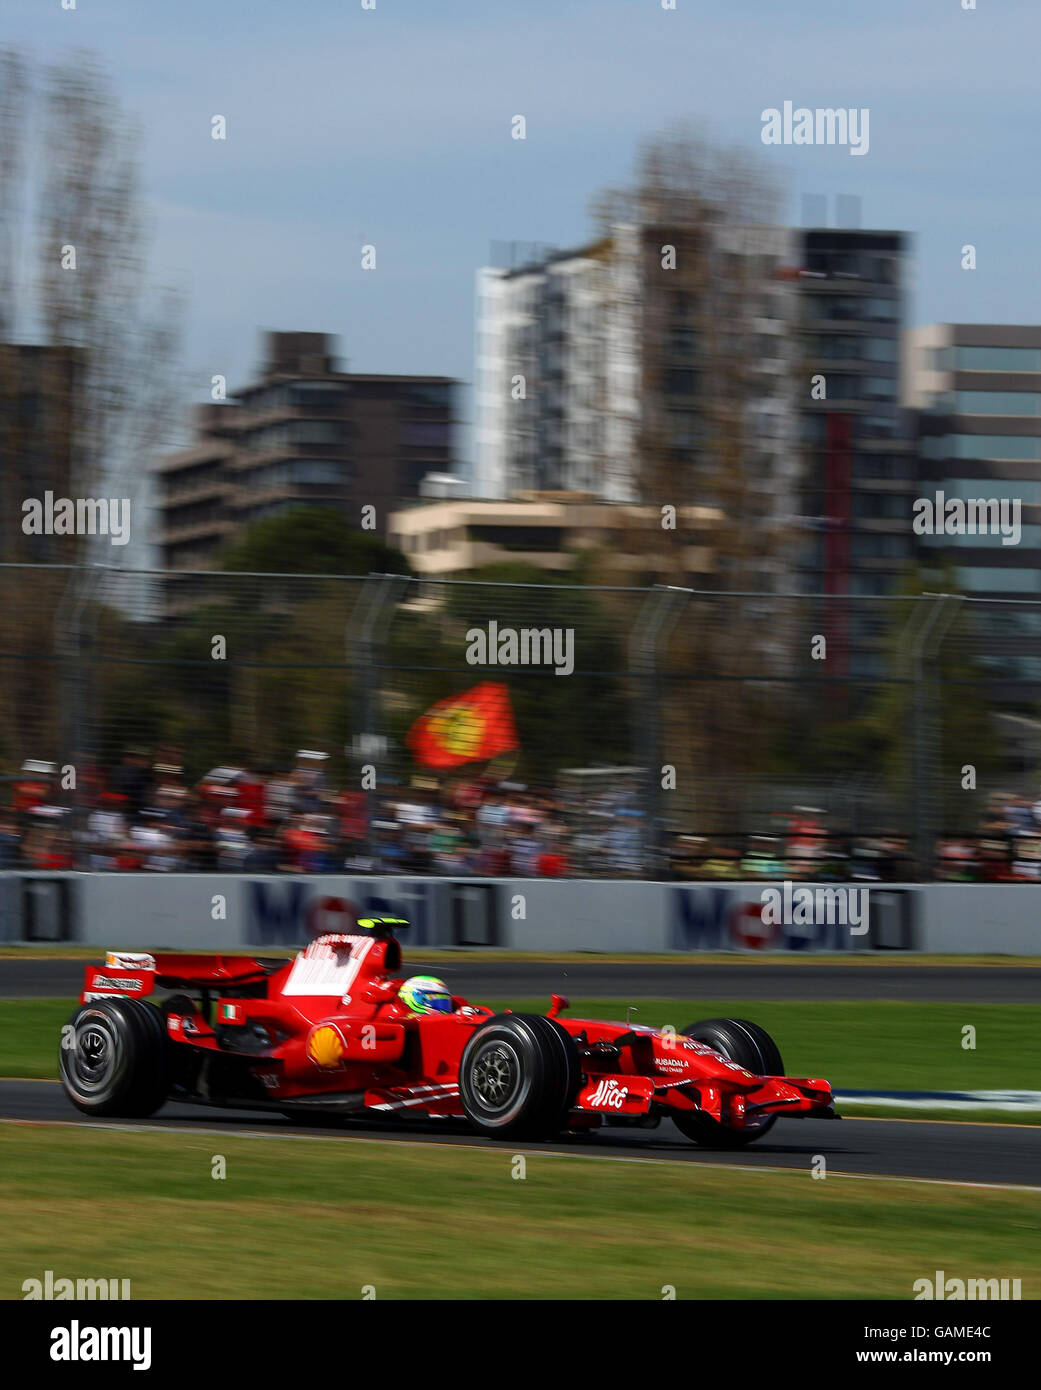 Felipe Massa de Brasil durante la clasificación en Albert Park, Melbourne, Australia. Foto de stock